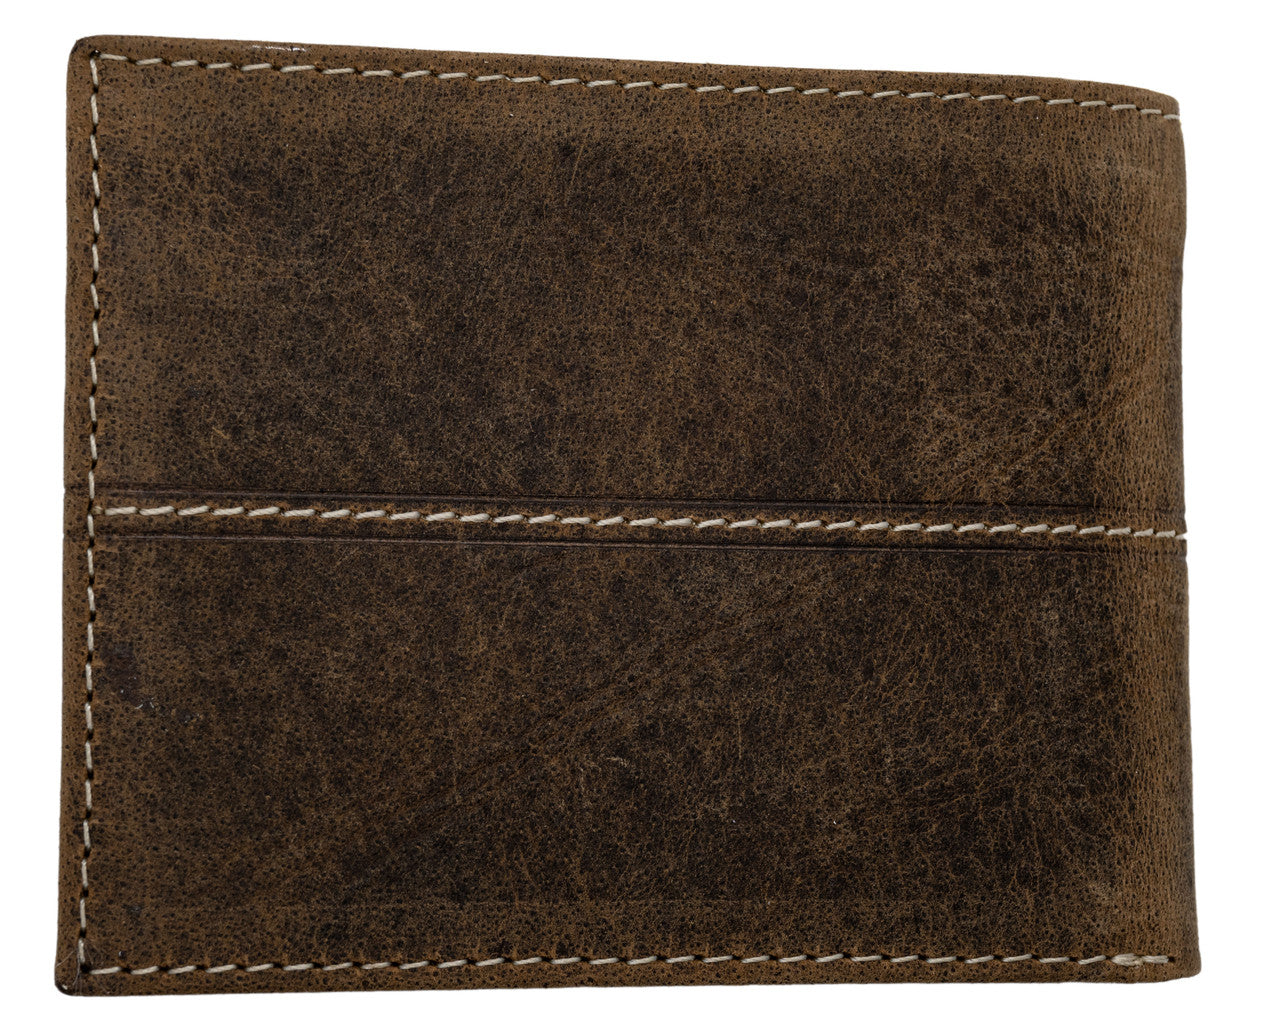 John Deere Distressed Leather Pass Case BiFold Wallet - Tan - 4096000-210